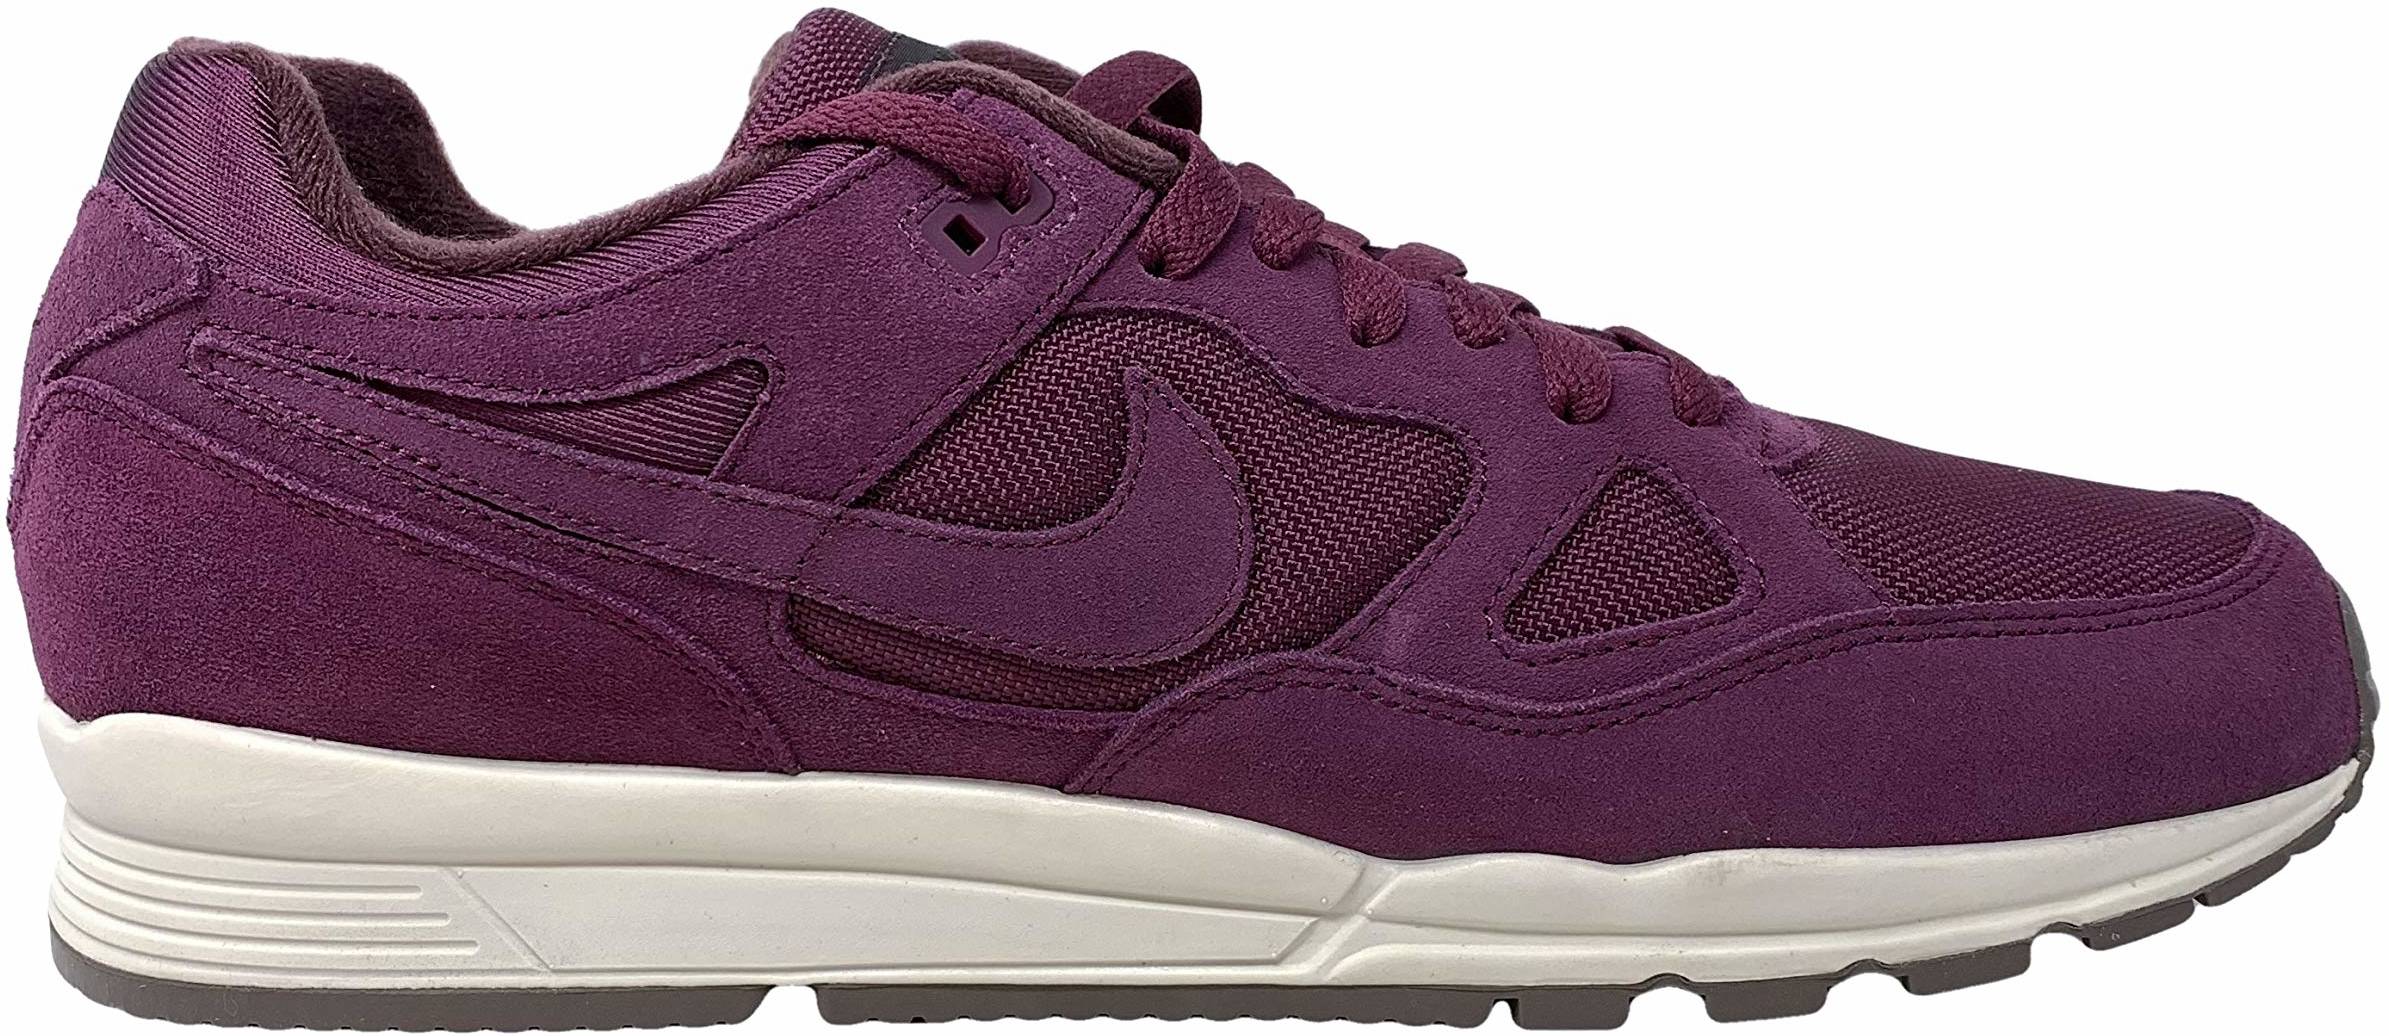 Save 38% on Purple Nike Sneakers (36 